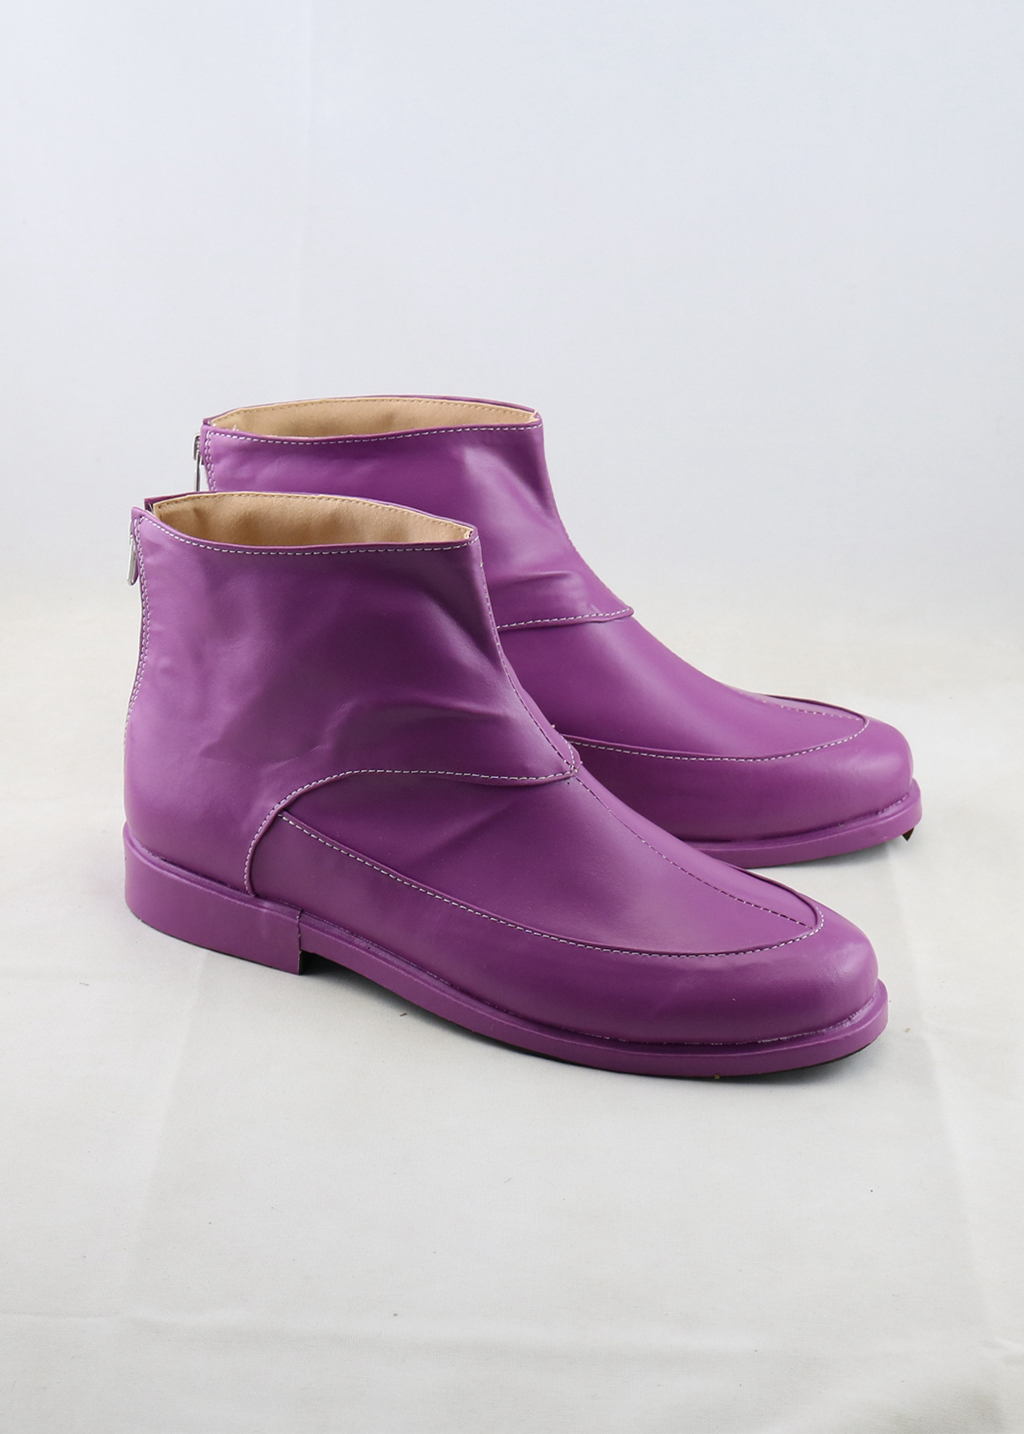 Funny Valentine Shoes Men Cosplay JoJo's Bizarre Adventure Boots